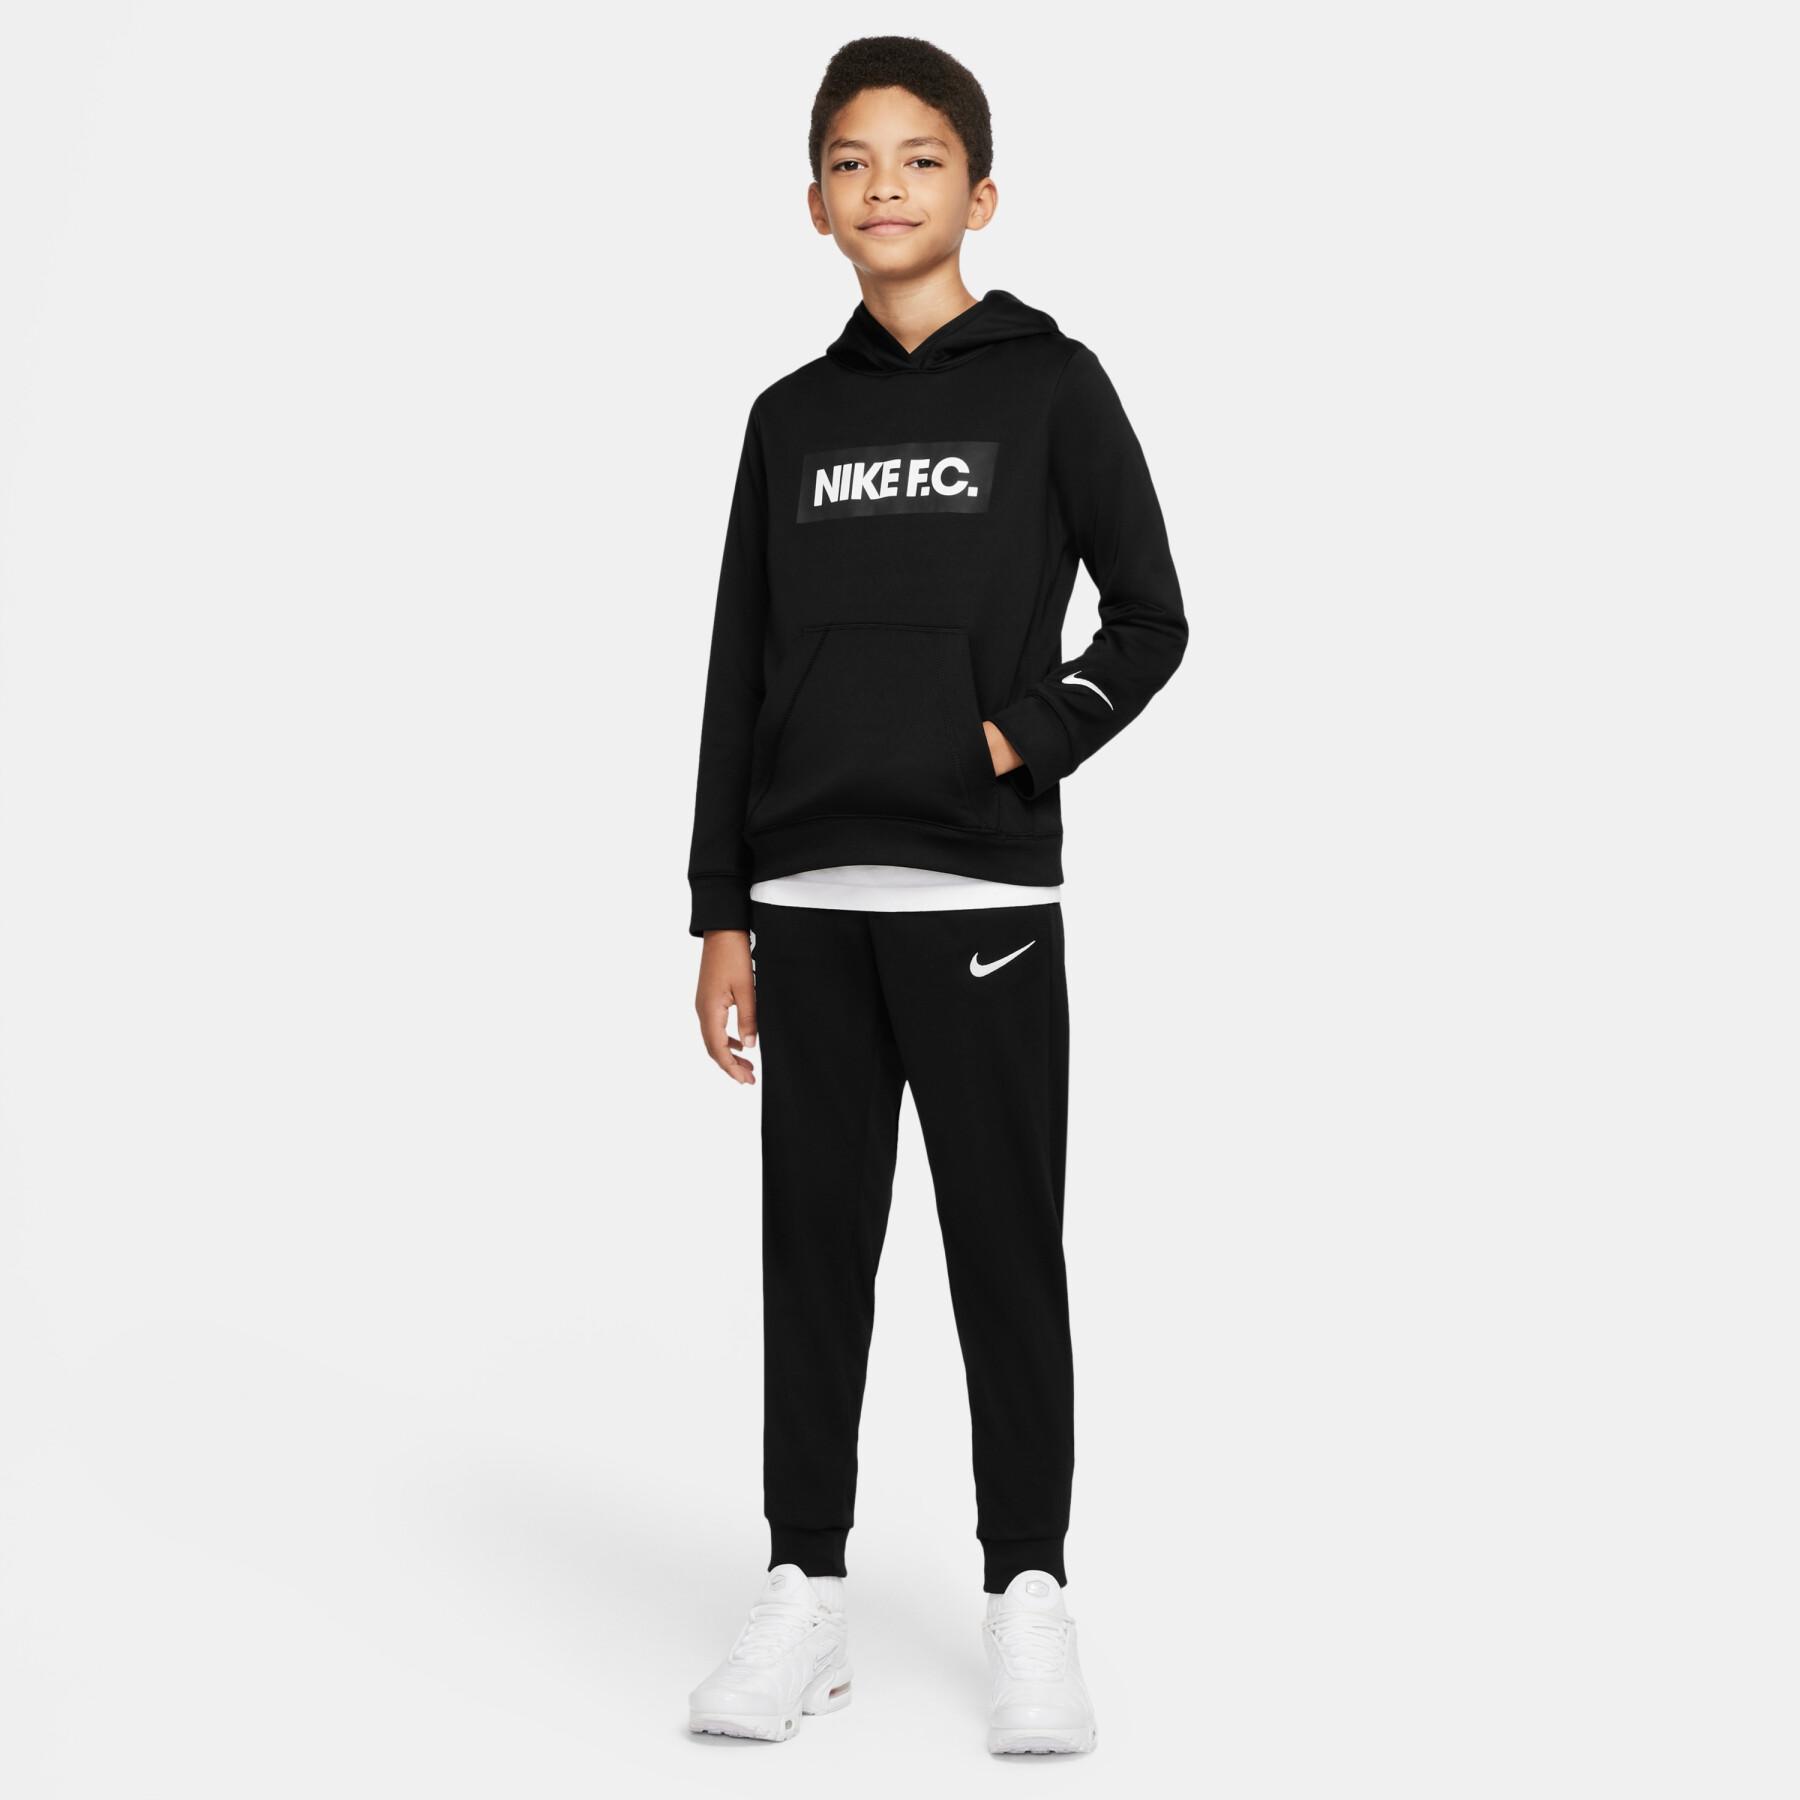 Children's hoodie Nike Dri-Fit Fc Libero Hoodie